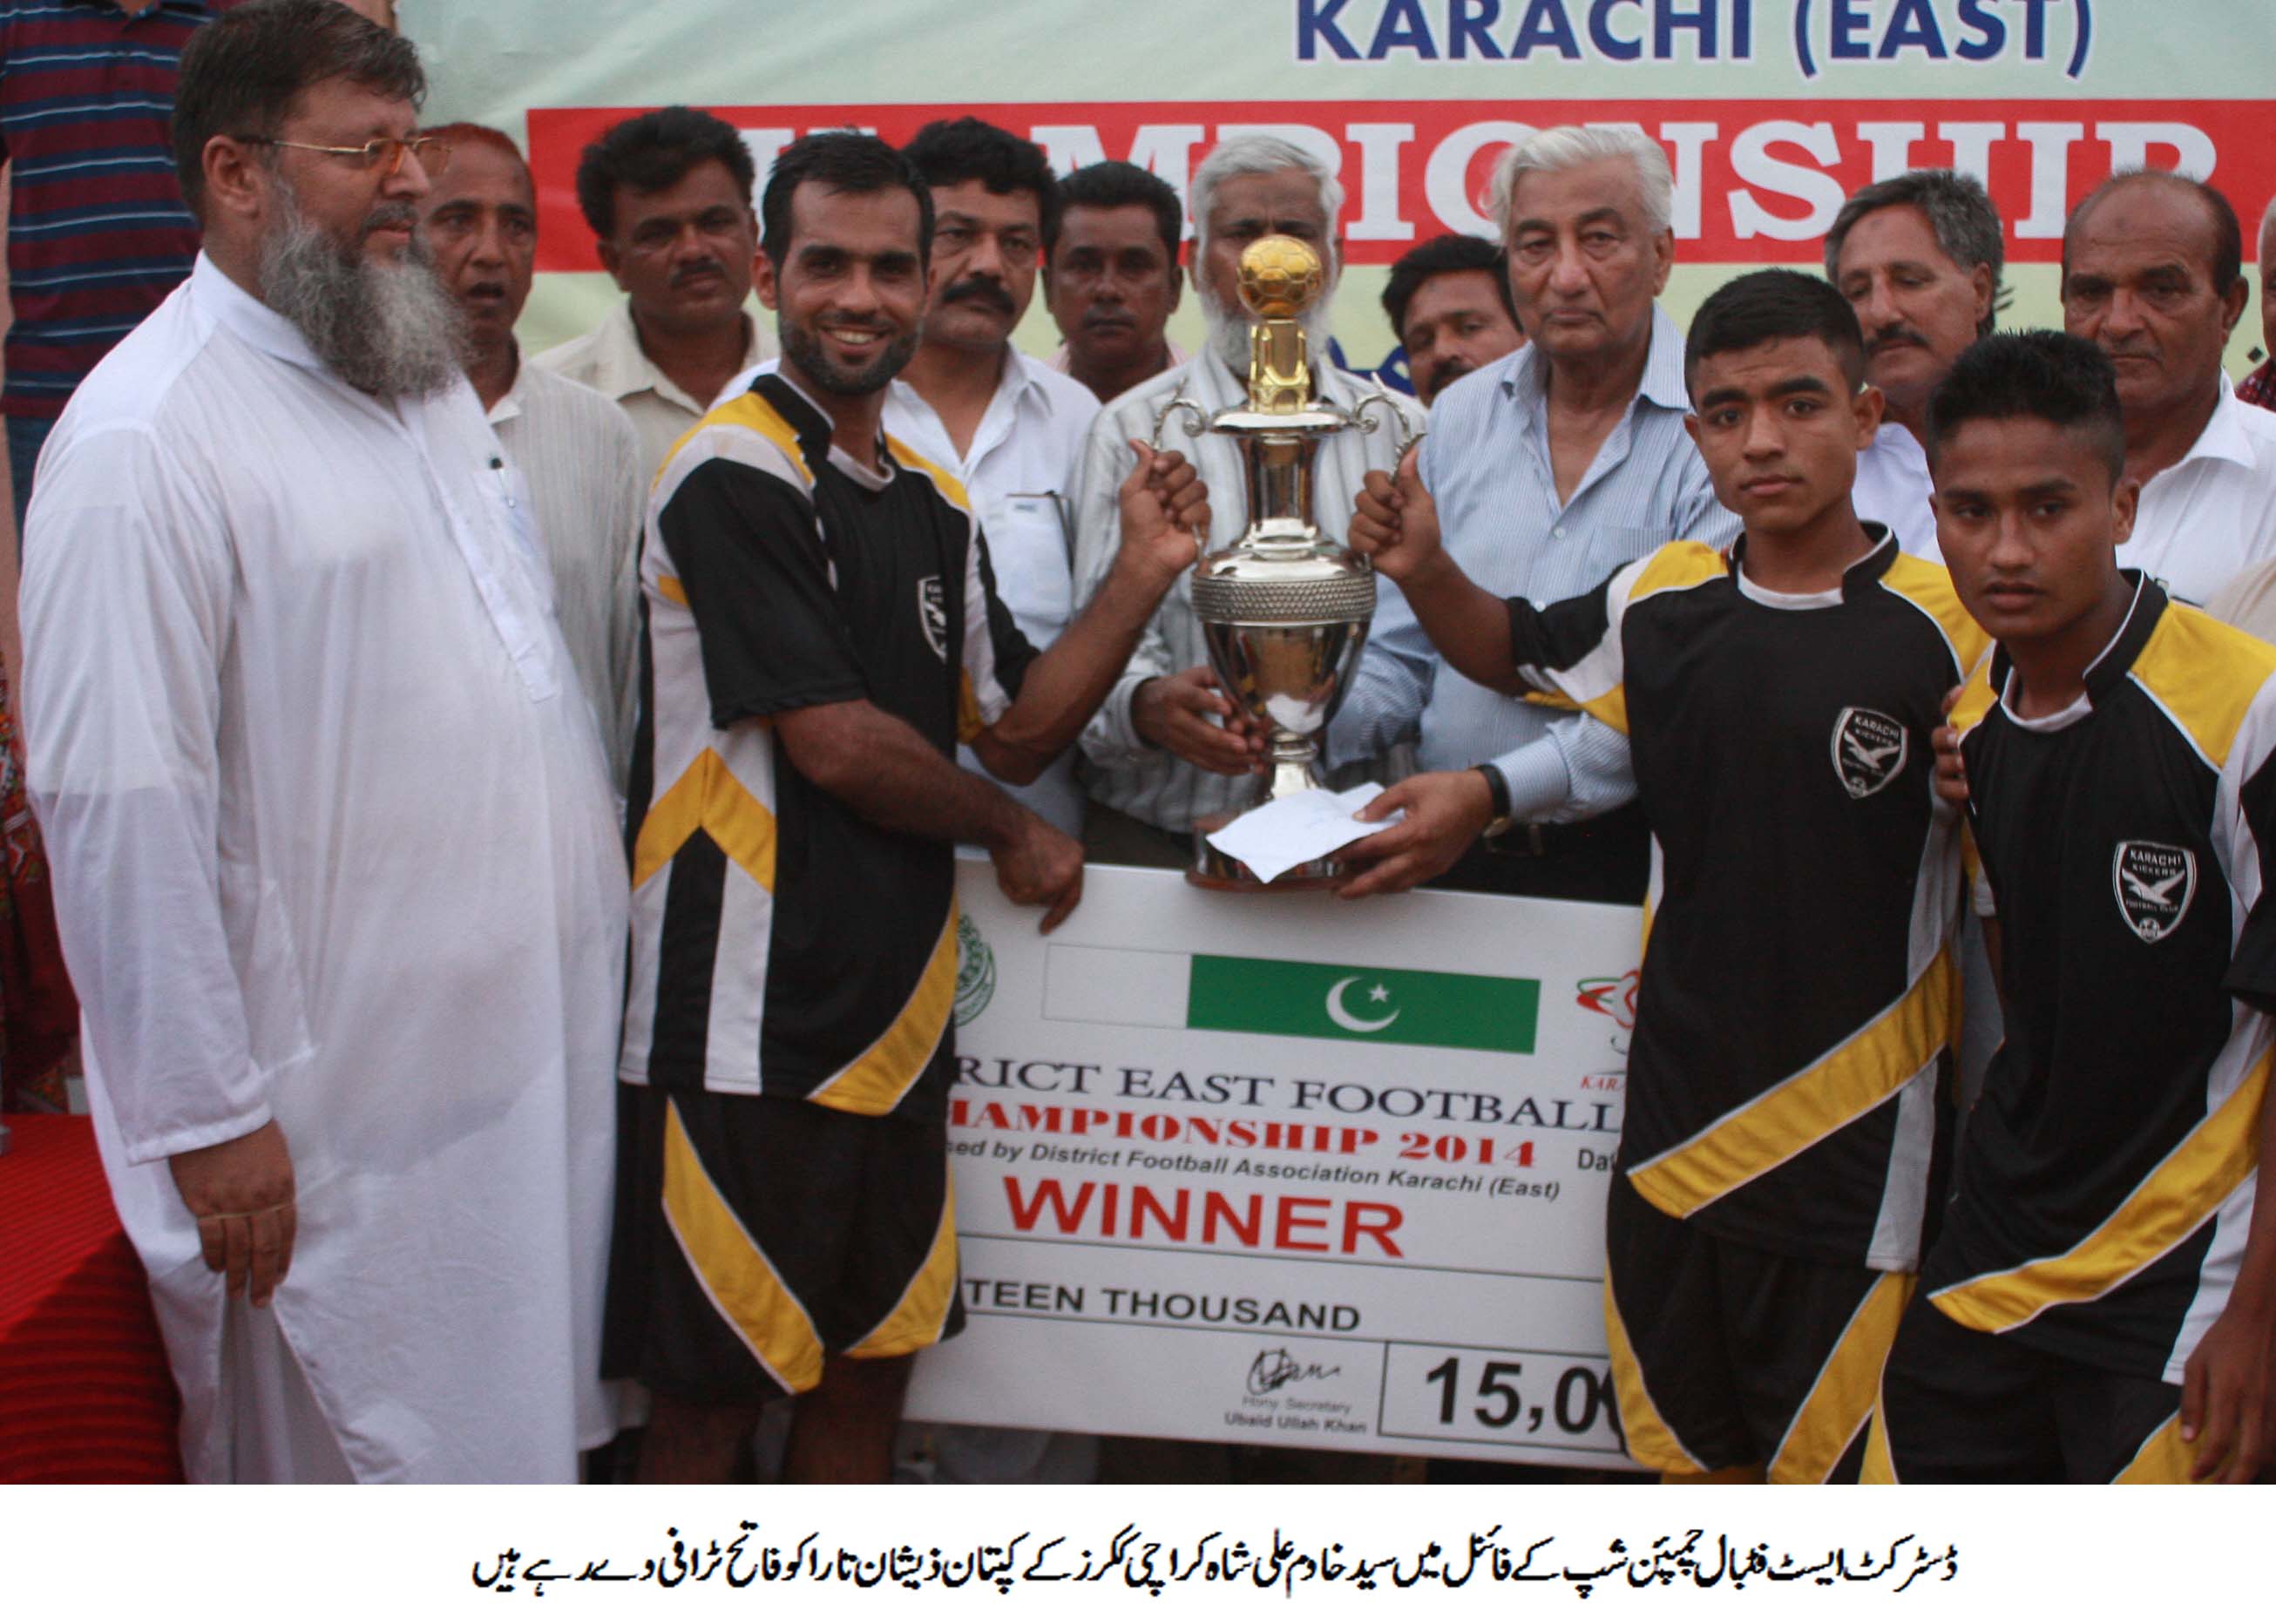 Karachi Kickers retain District East Championship title!